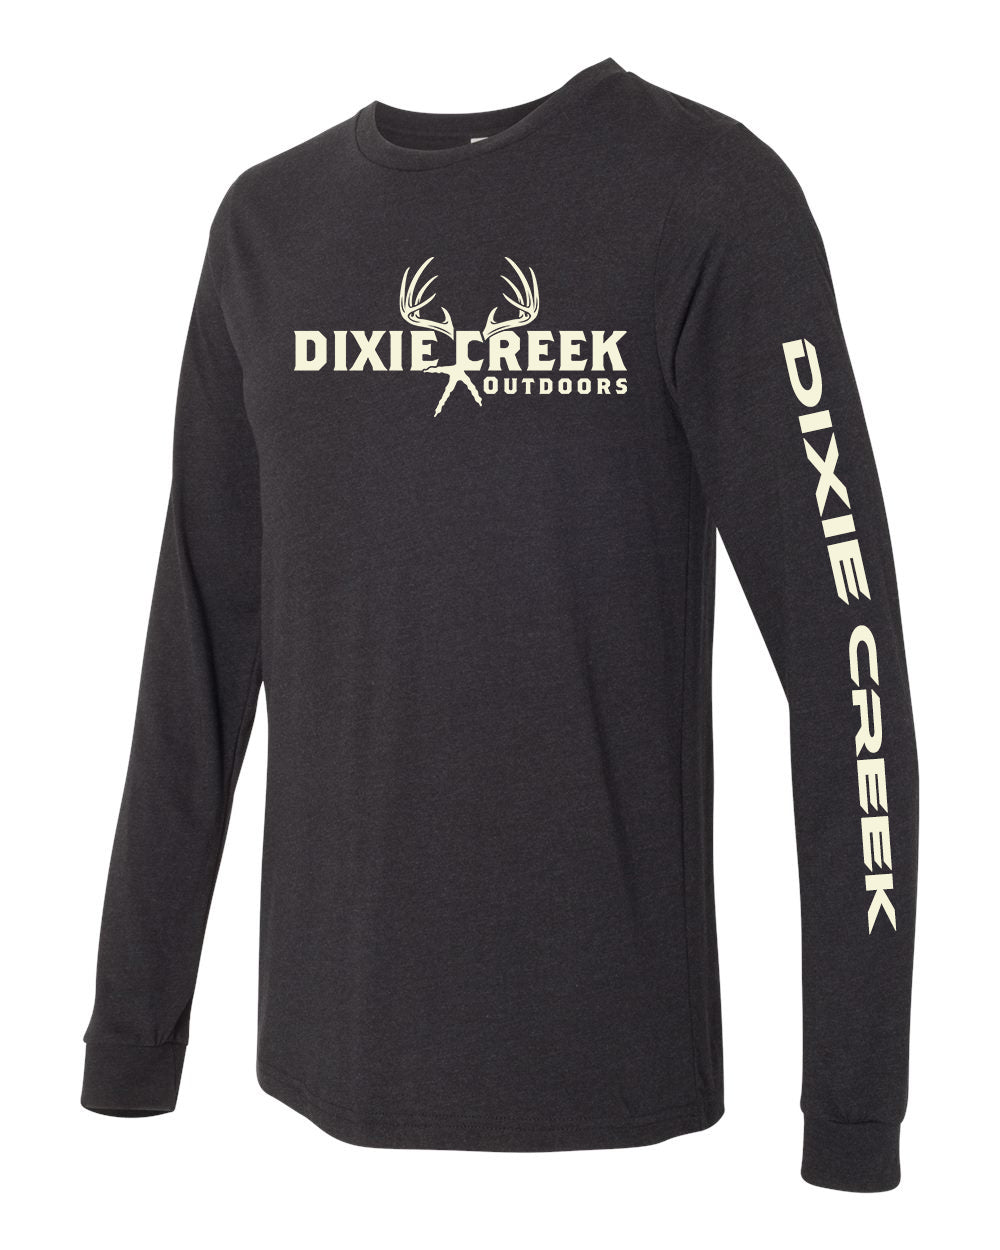 Dixie Creek Outdoors With Sleeve Print - Cream Logo